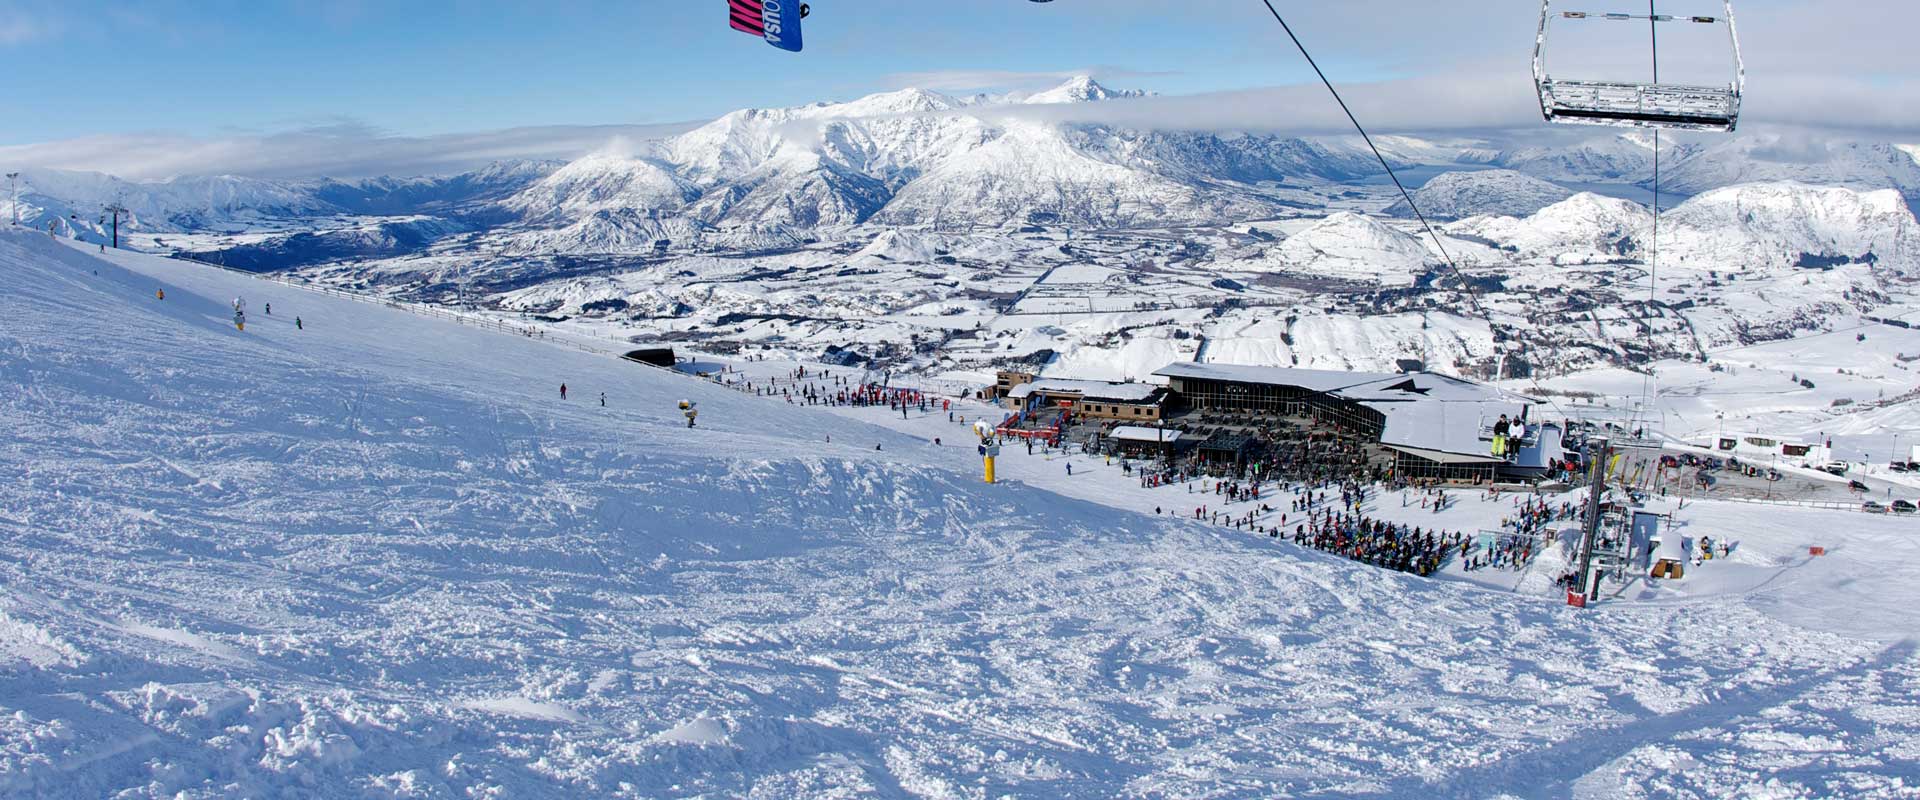 Coronet Peak Ski Resort